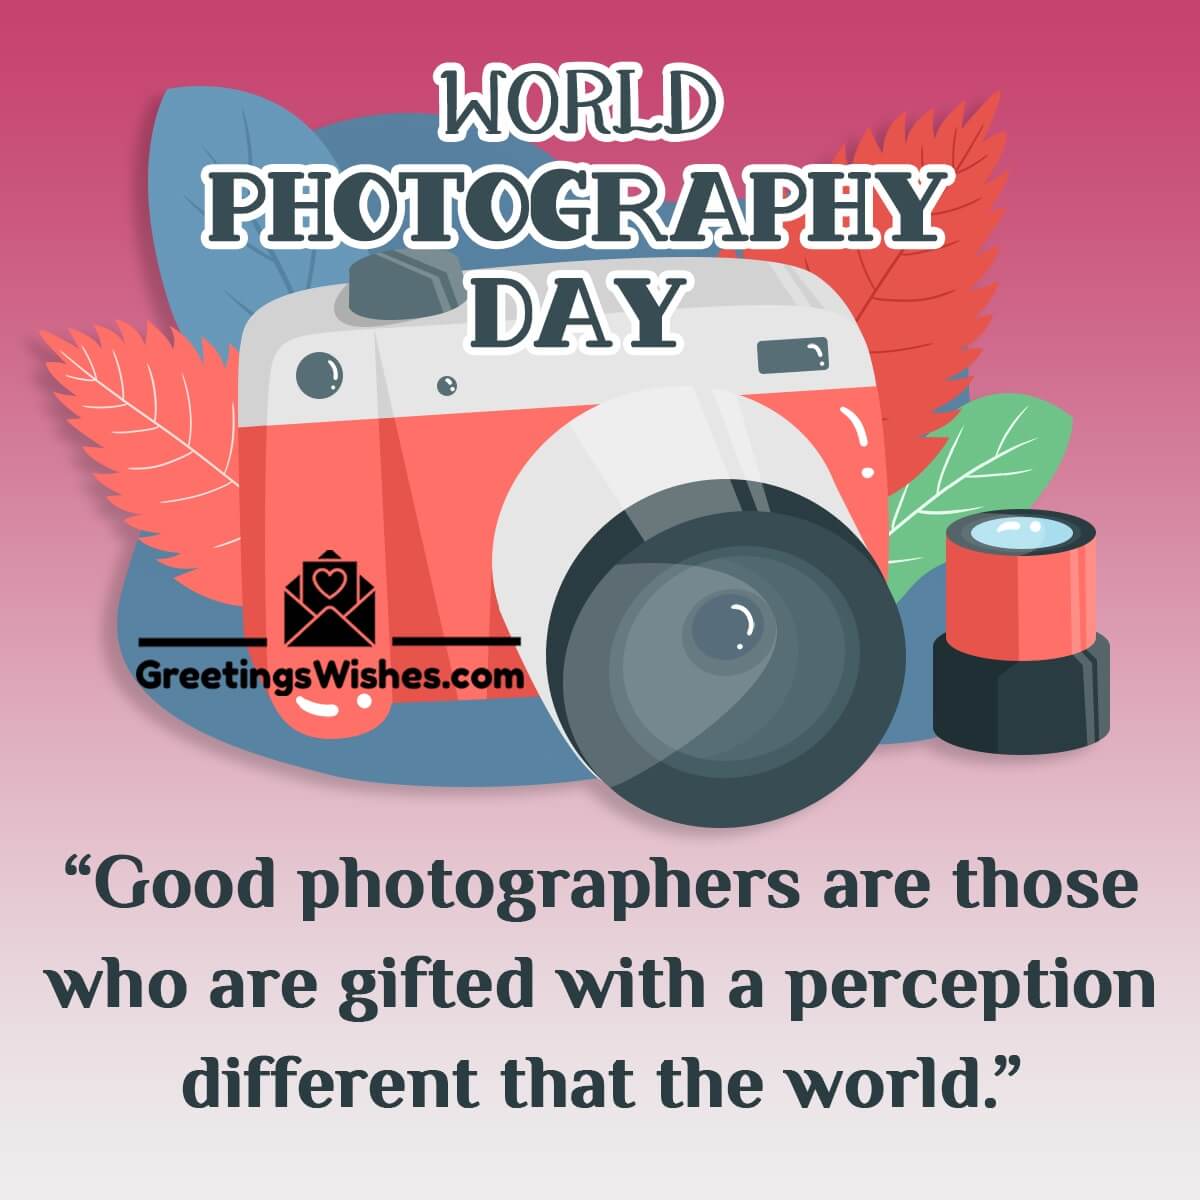 World Photography Day Status Image